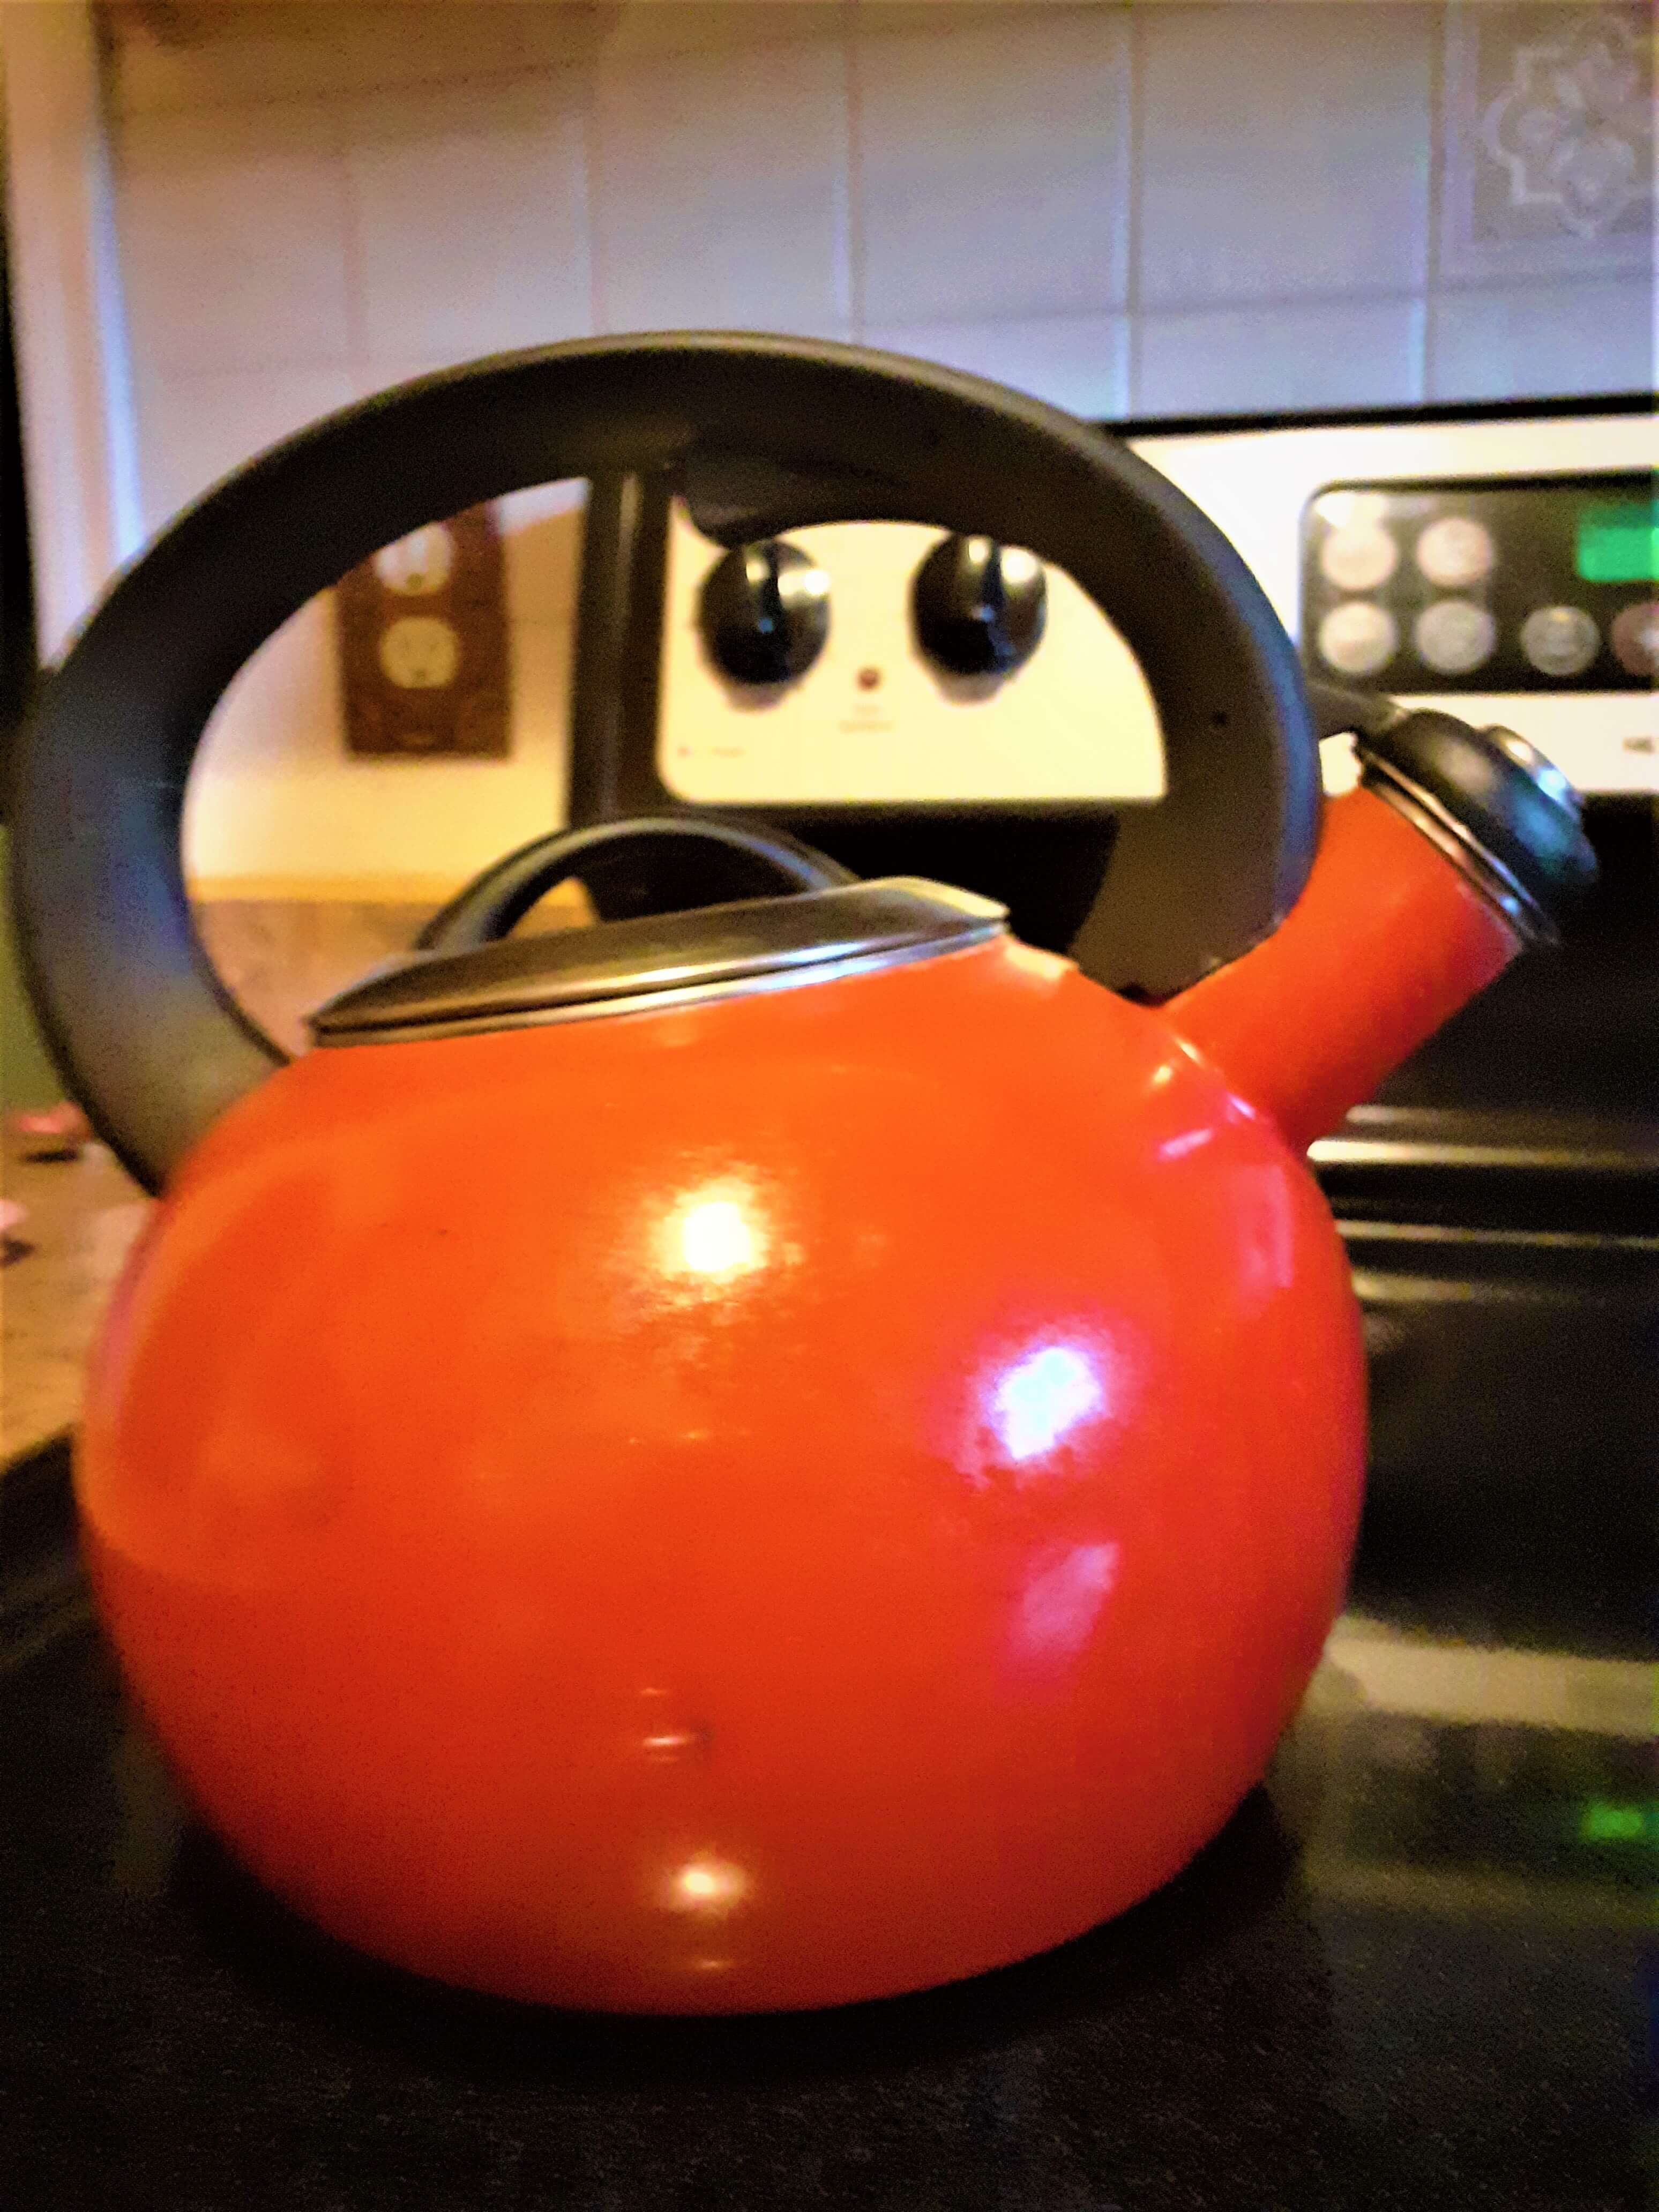 Tea kettle on a stove.